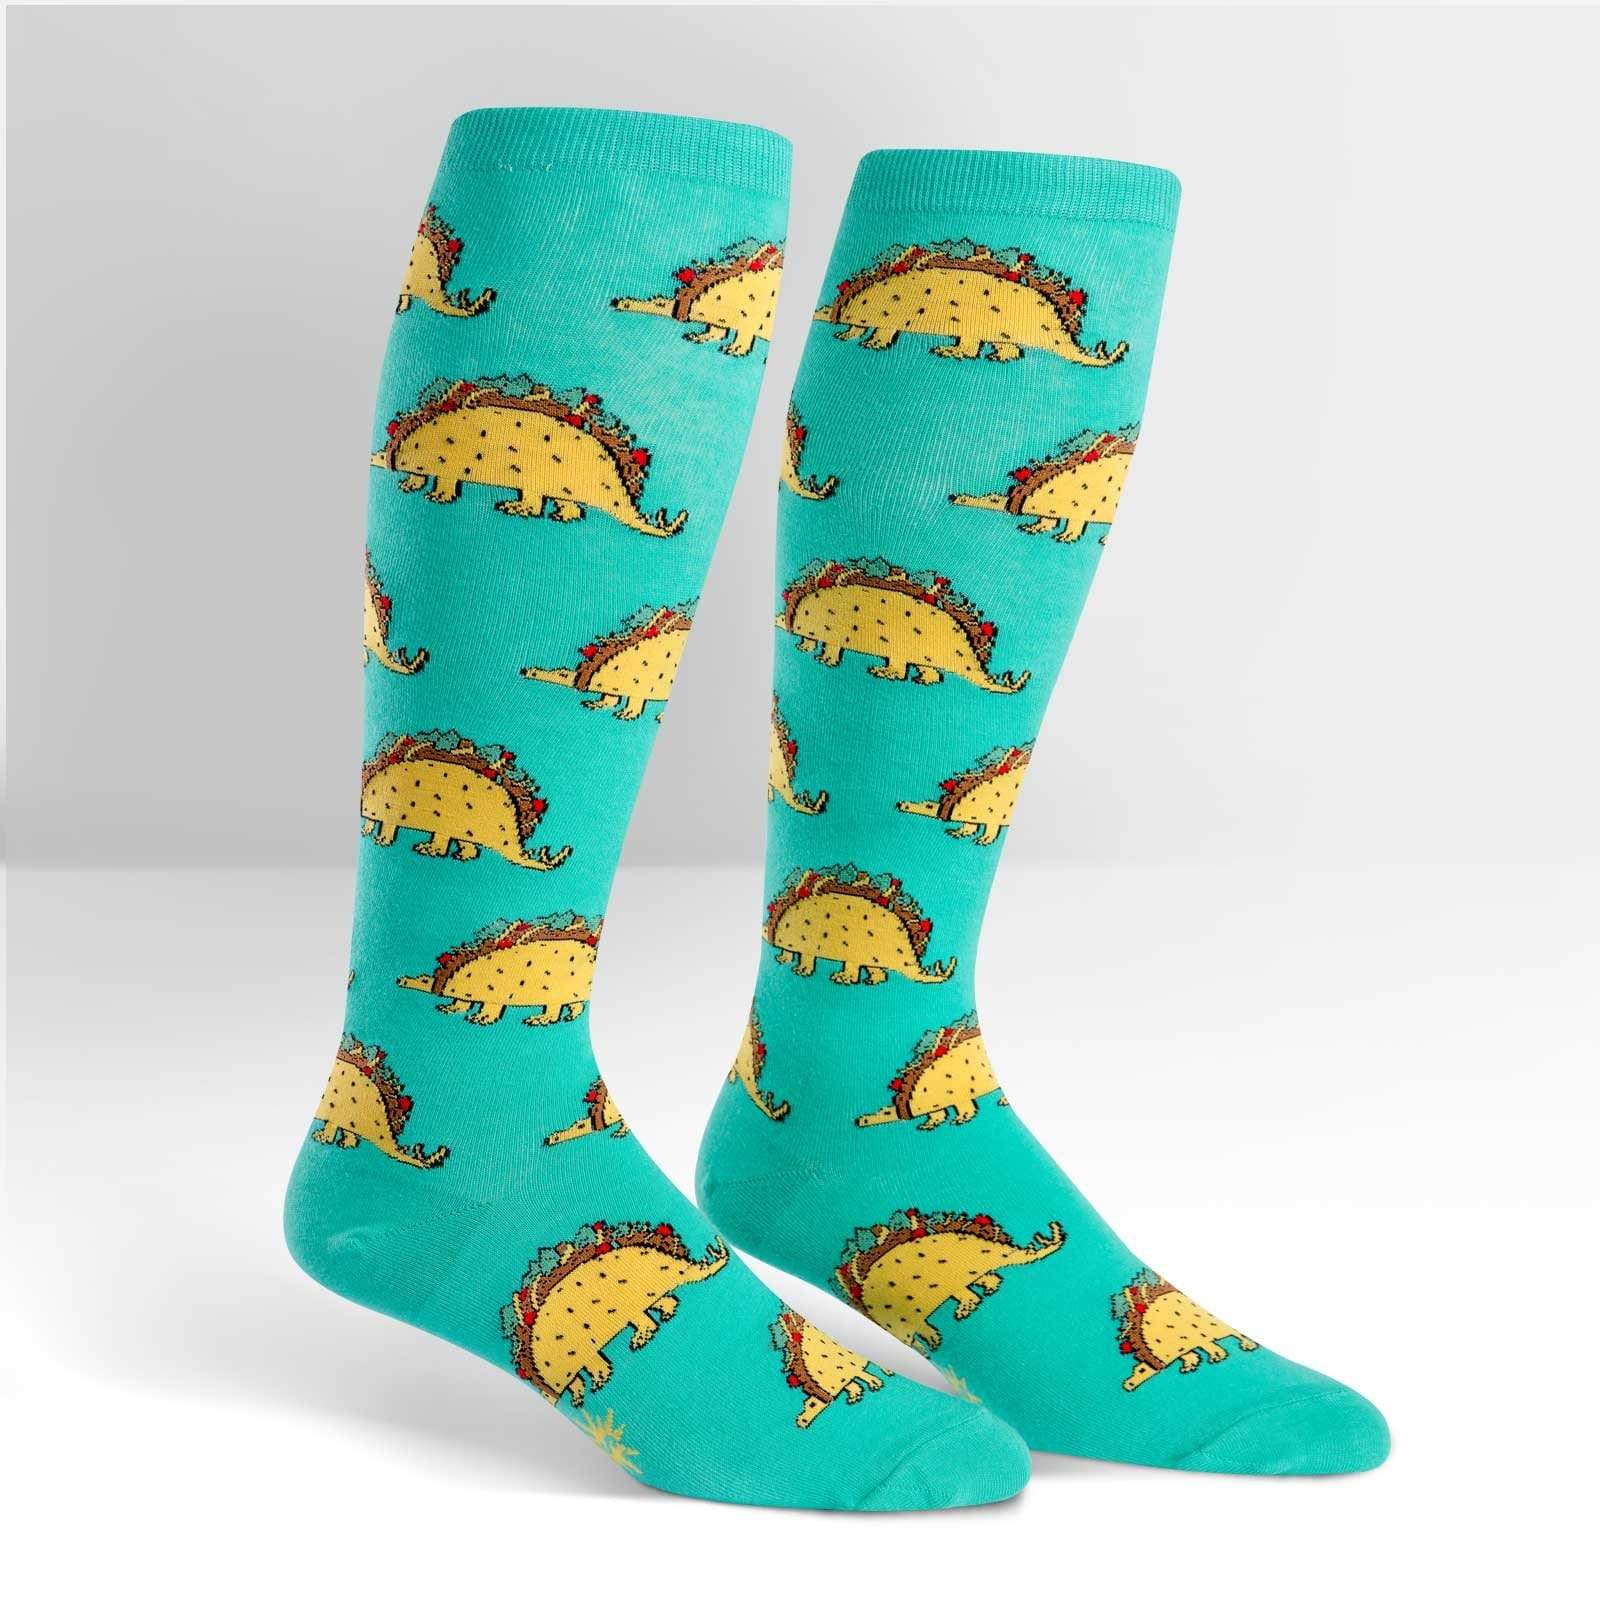 Taco-Saurus Socks Women's Knee High Sock Regular / Teal